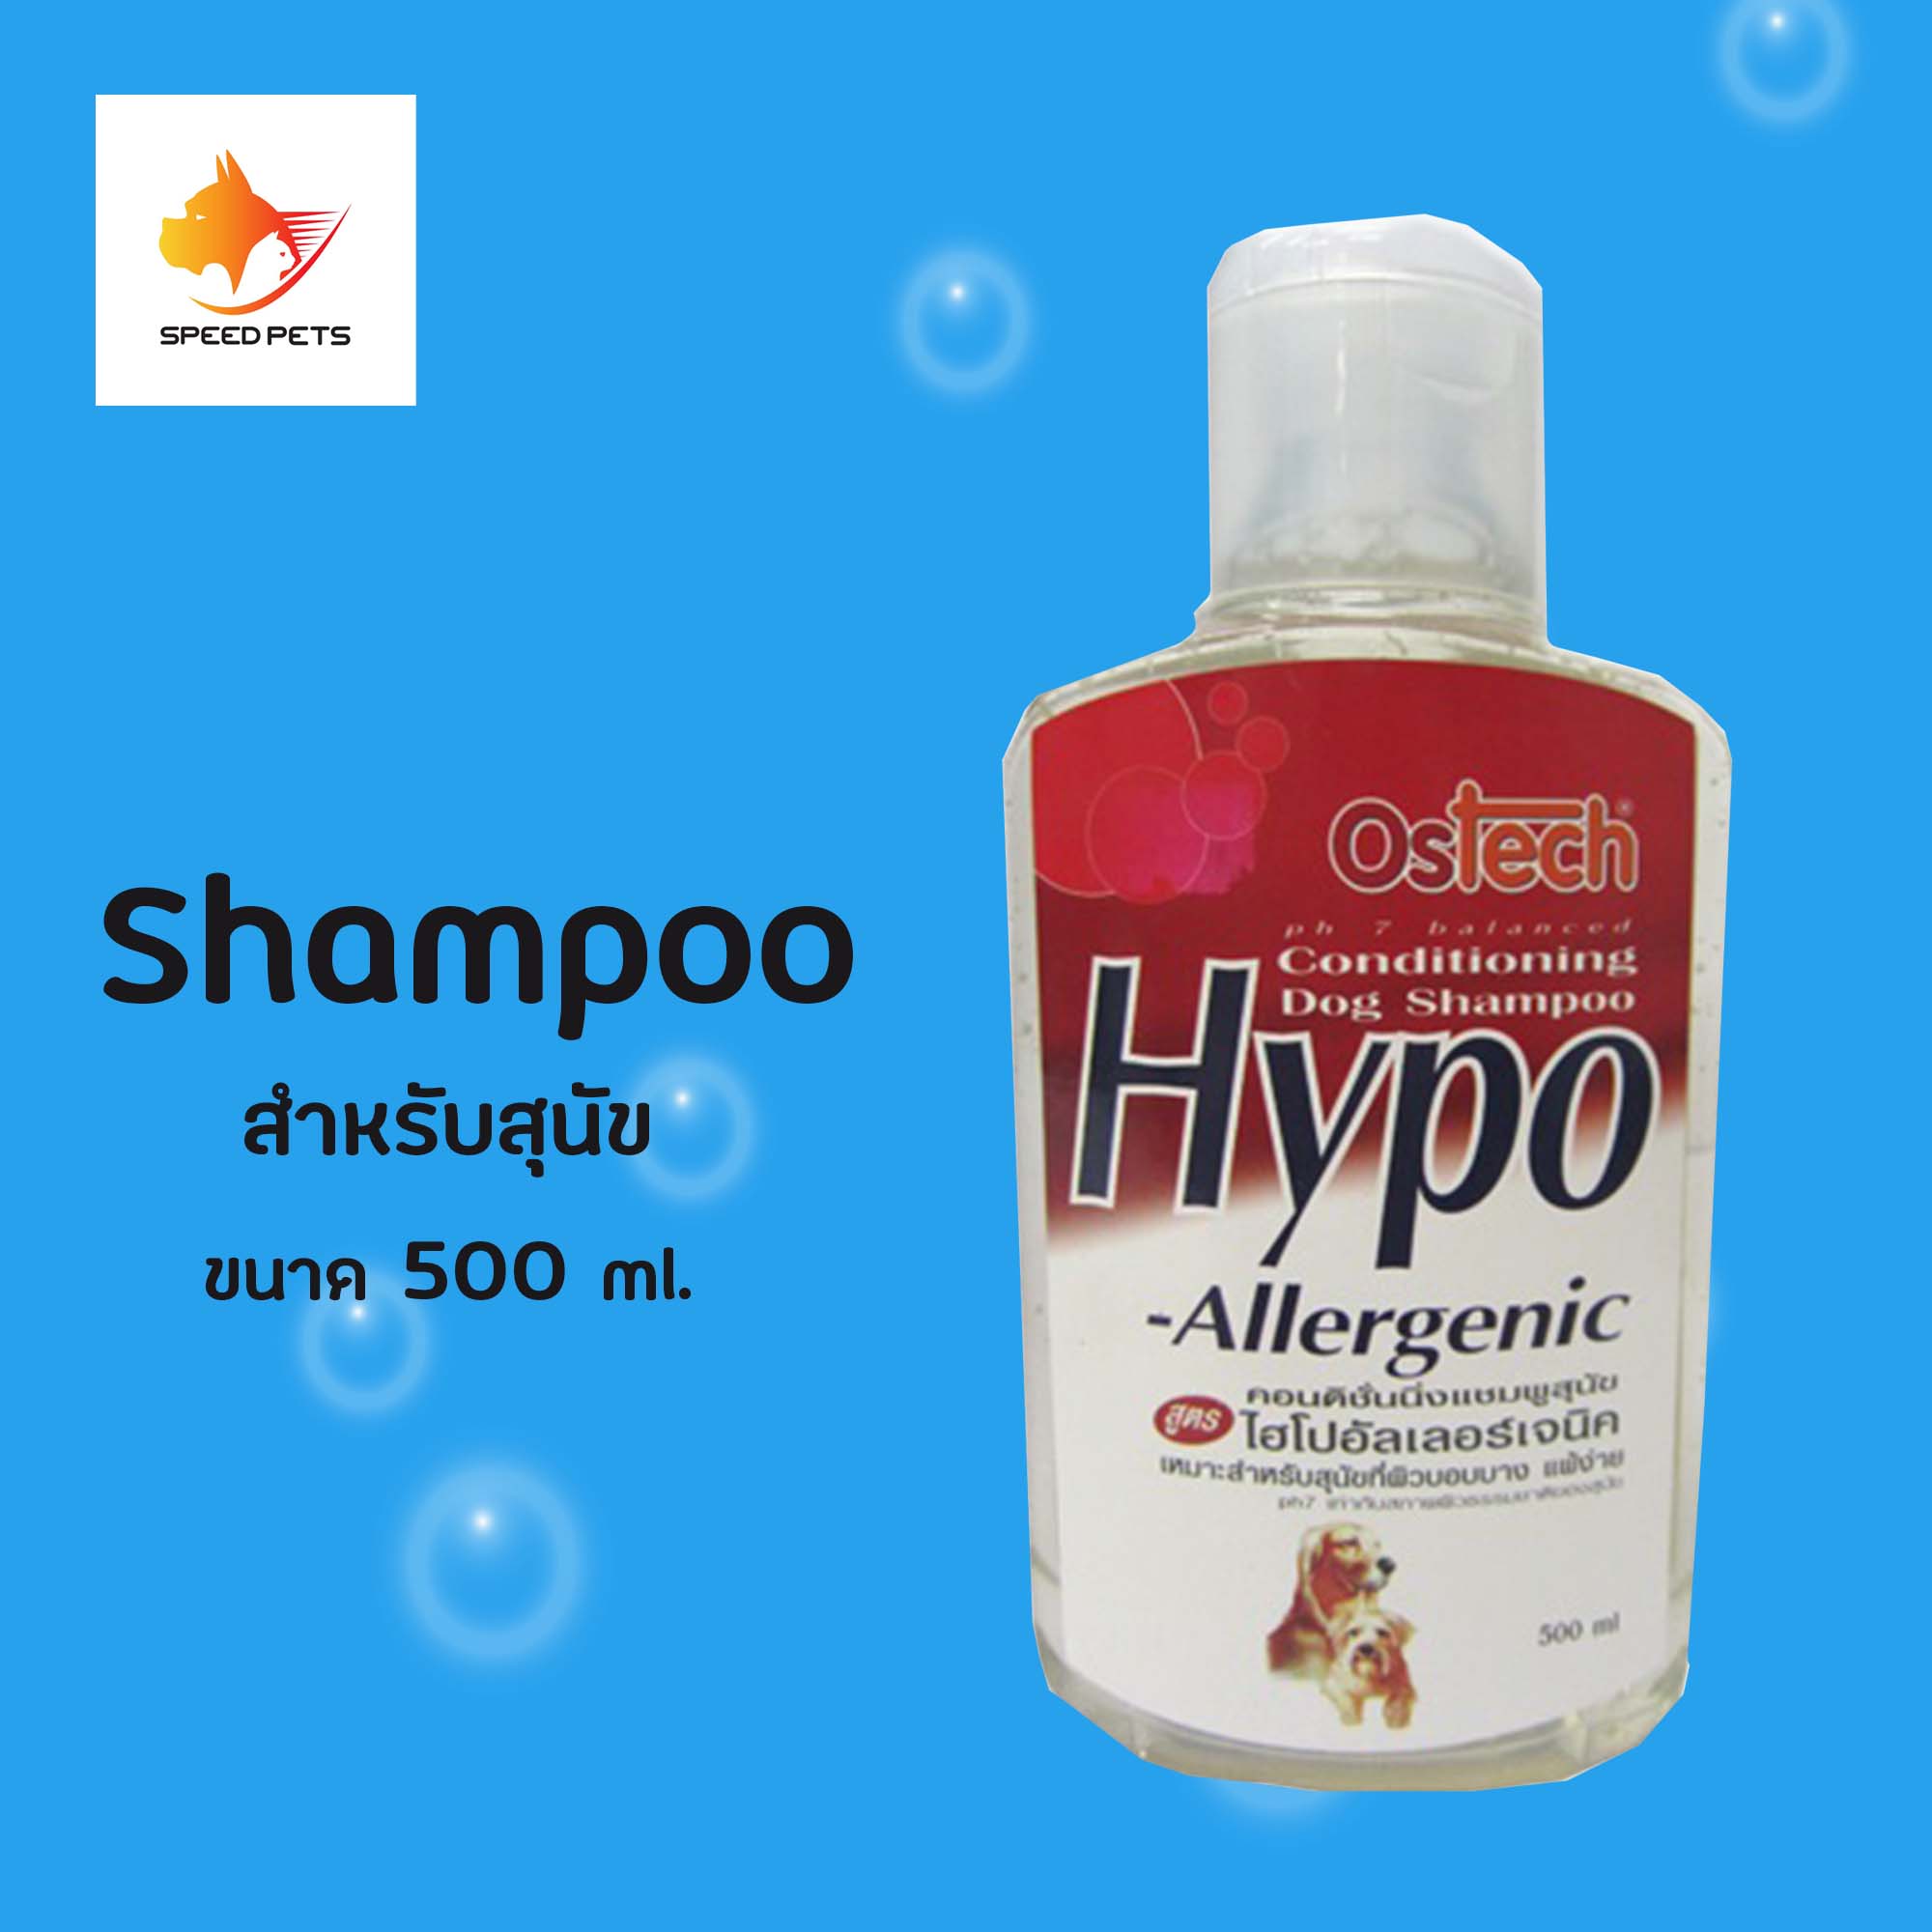 Ostech hypo allergenic shampoo 500ml ออสเทค ไฮโป แชมพู 500ml